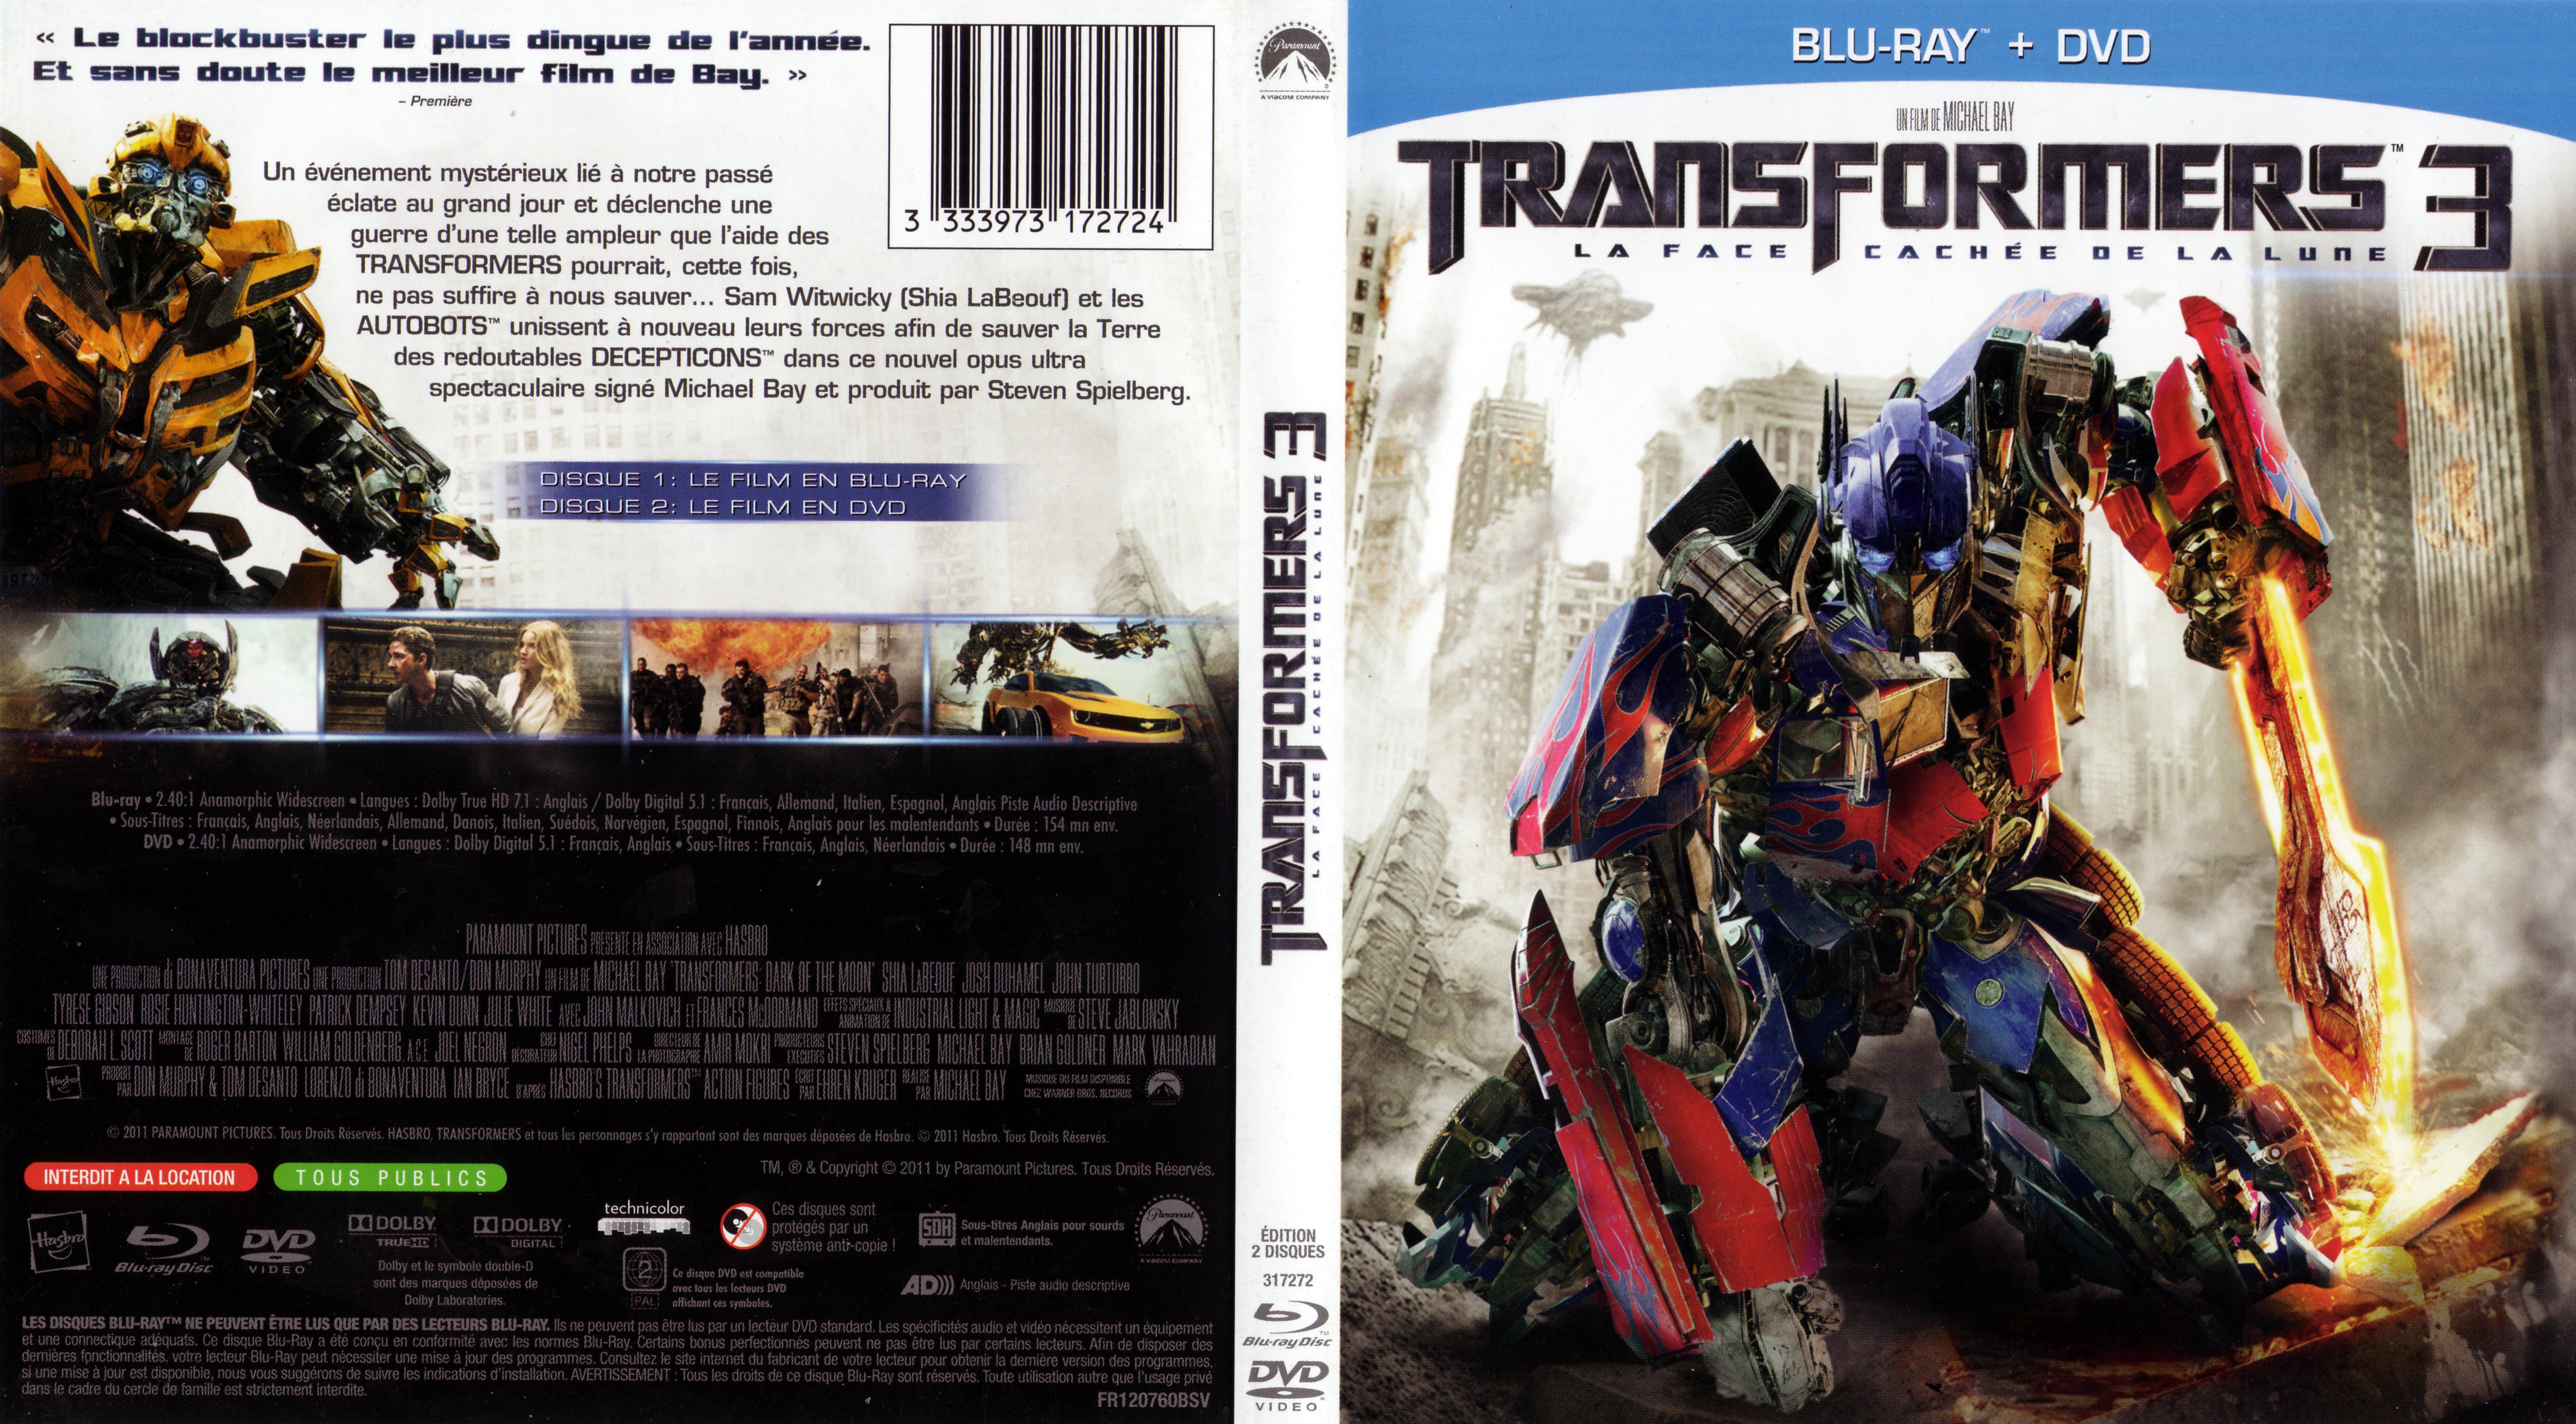 Jaquette DVD Transformers 3 (BLU-RAY) v2